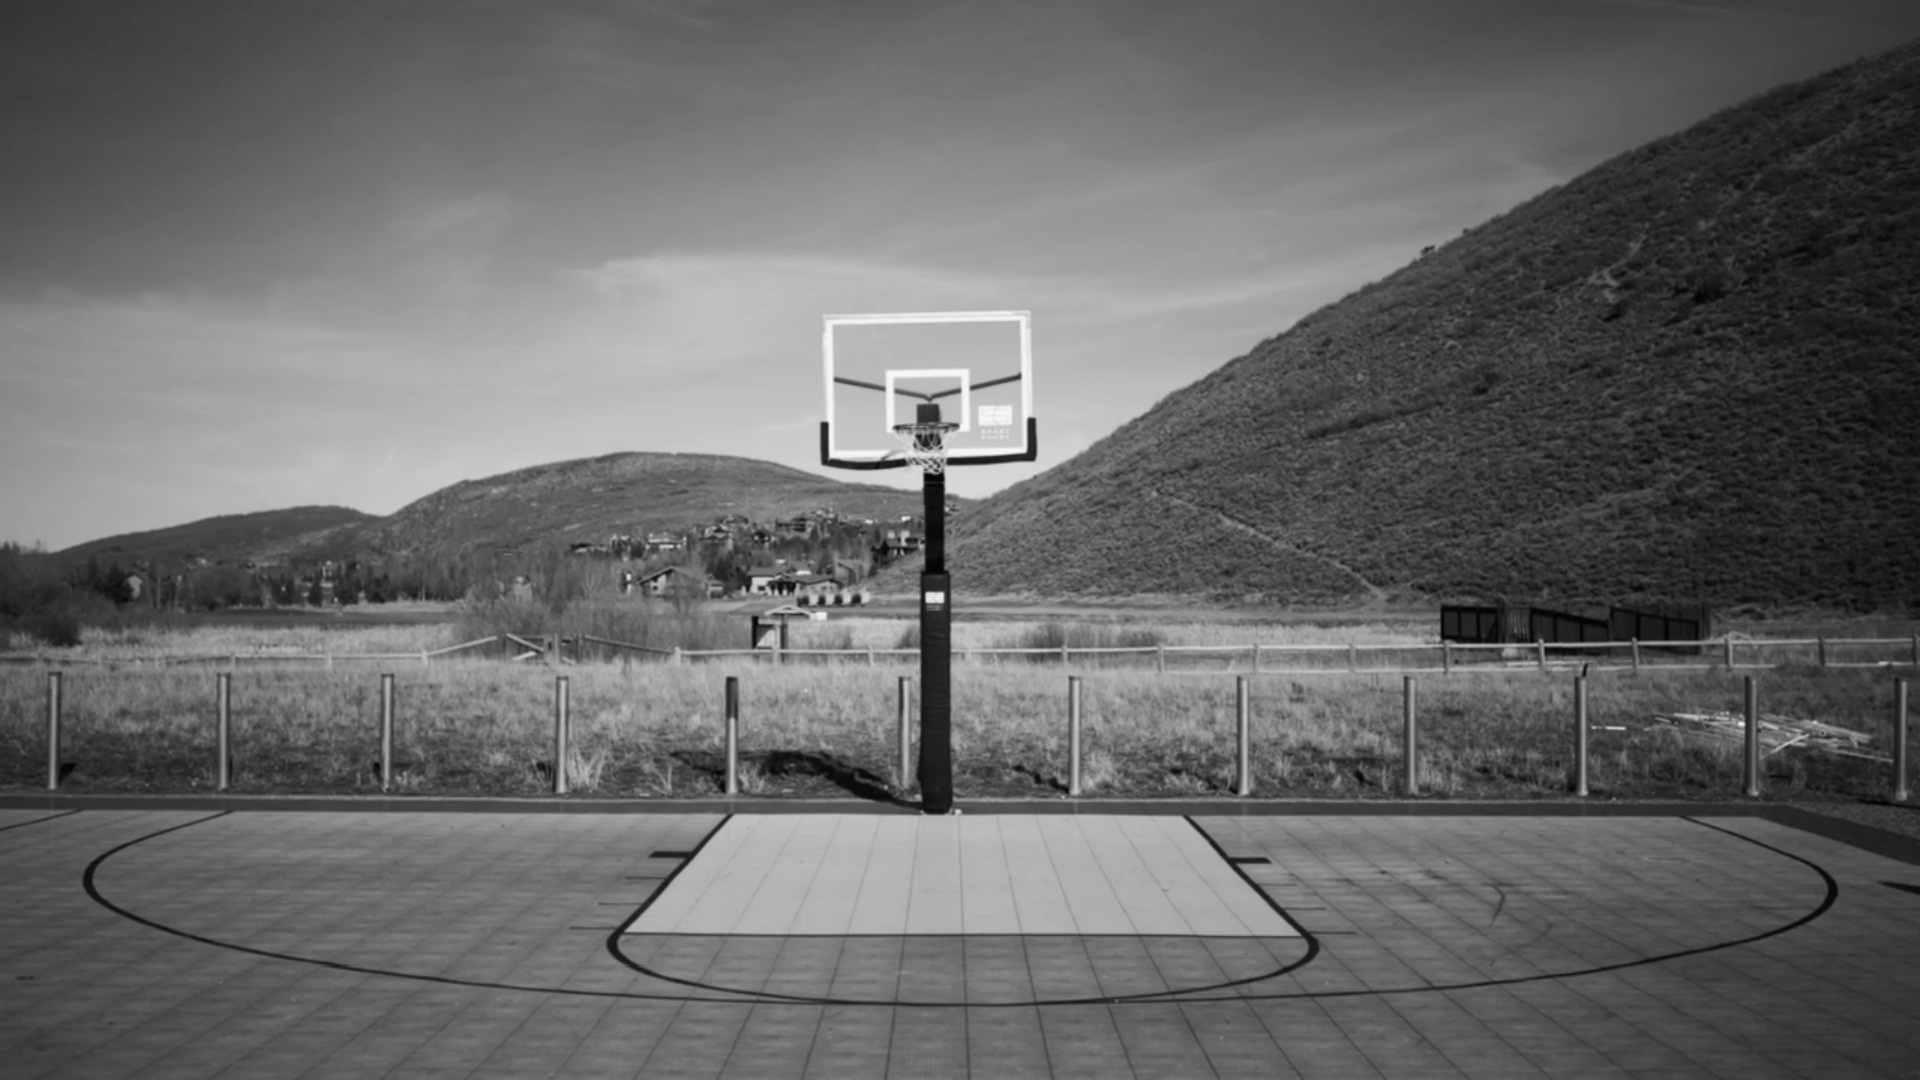 Streetball: Monochrome Court in California, 3x3 variation of basketball court. 1920x1080 Full HD Wallpaper.